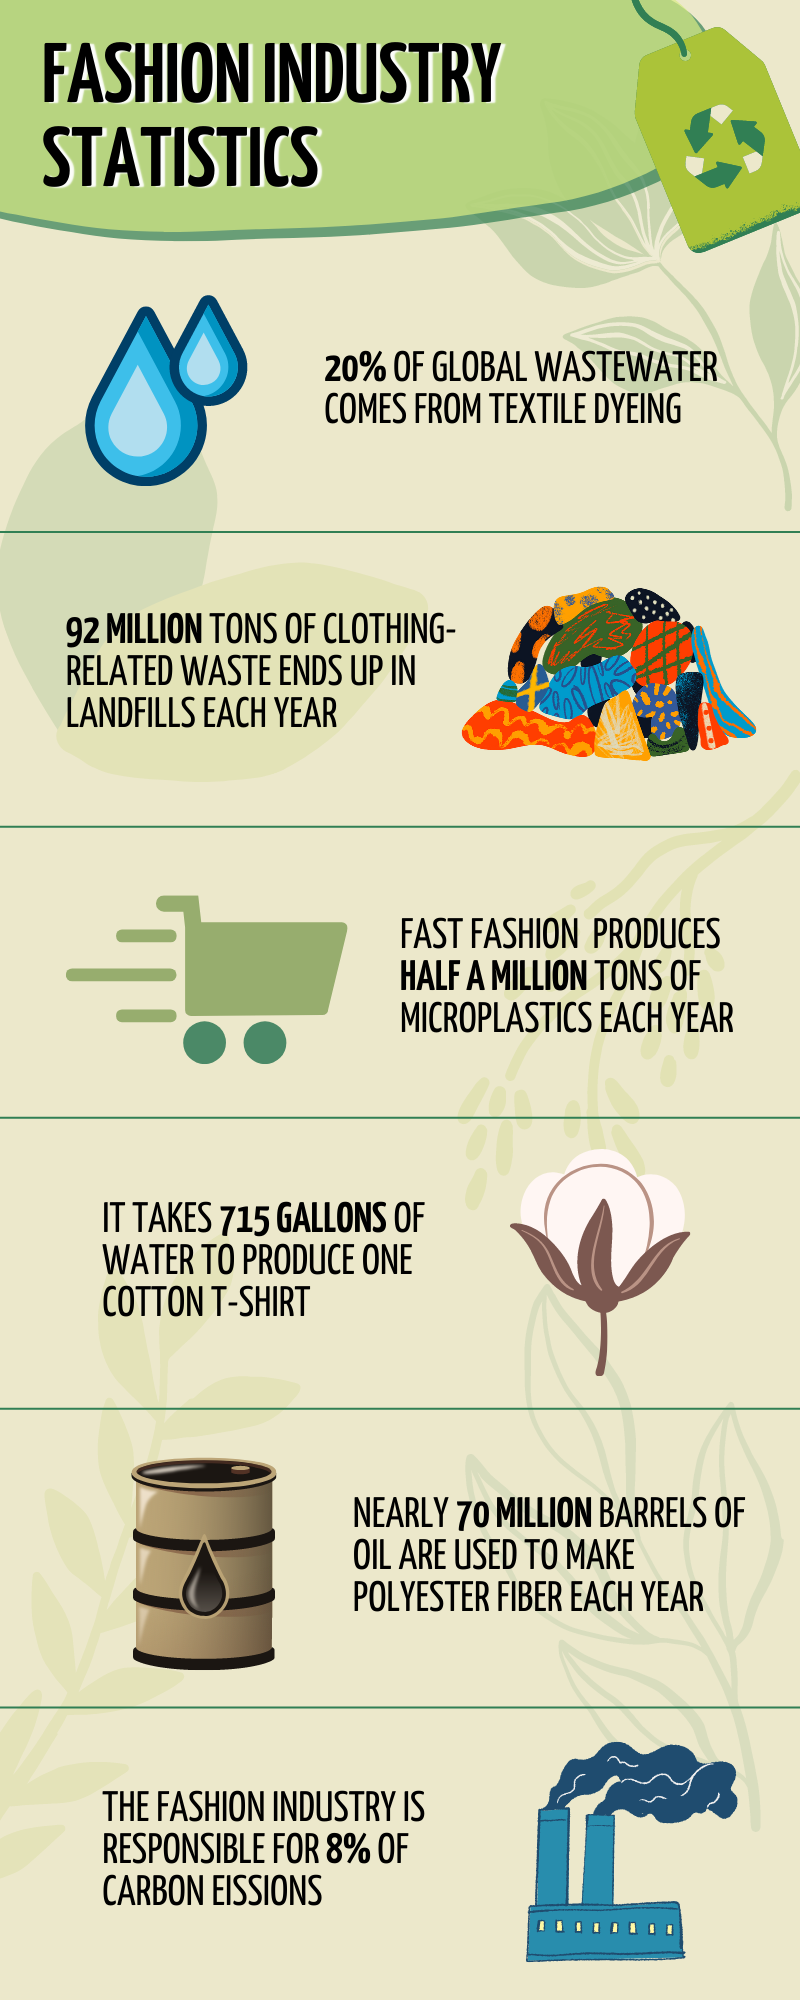 Fashion Industry Statistics